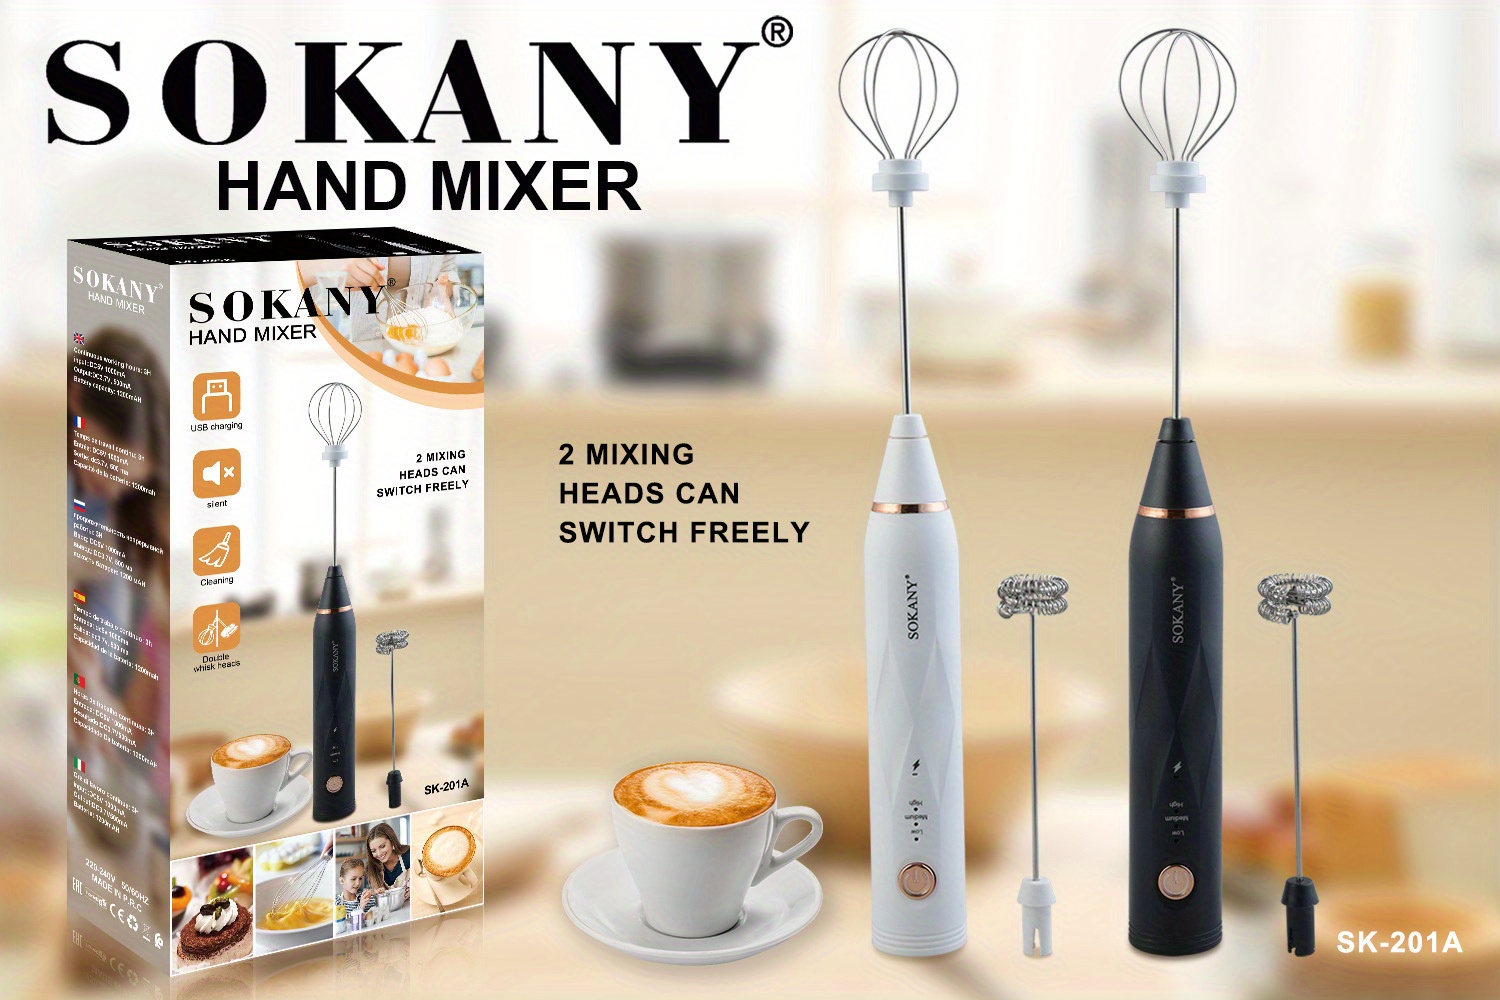 Sokany Portable Lightweight Electronic Rechargeable Coffee